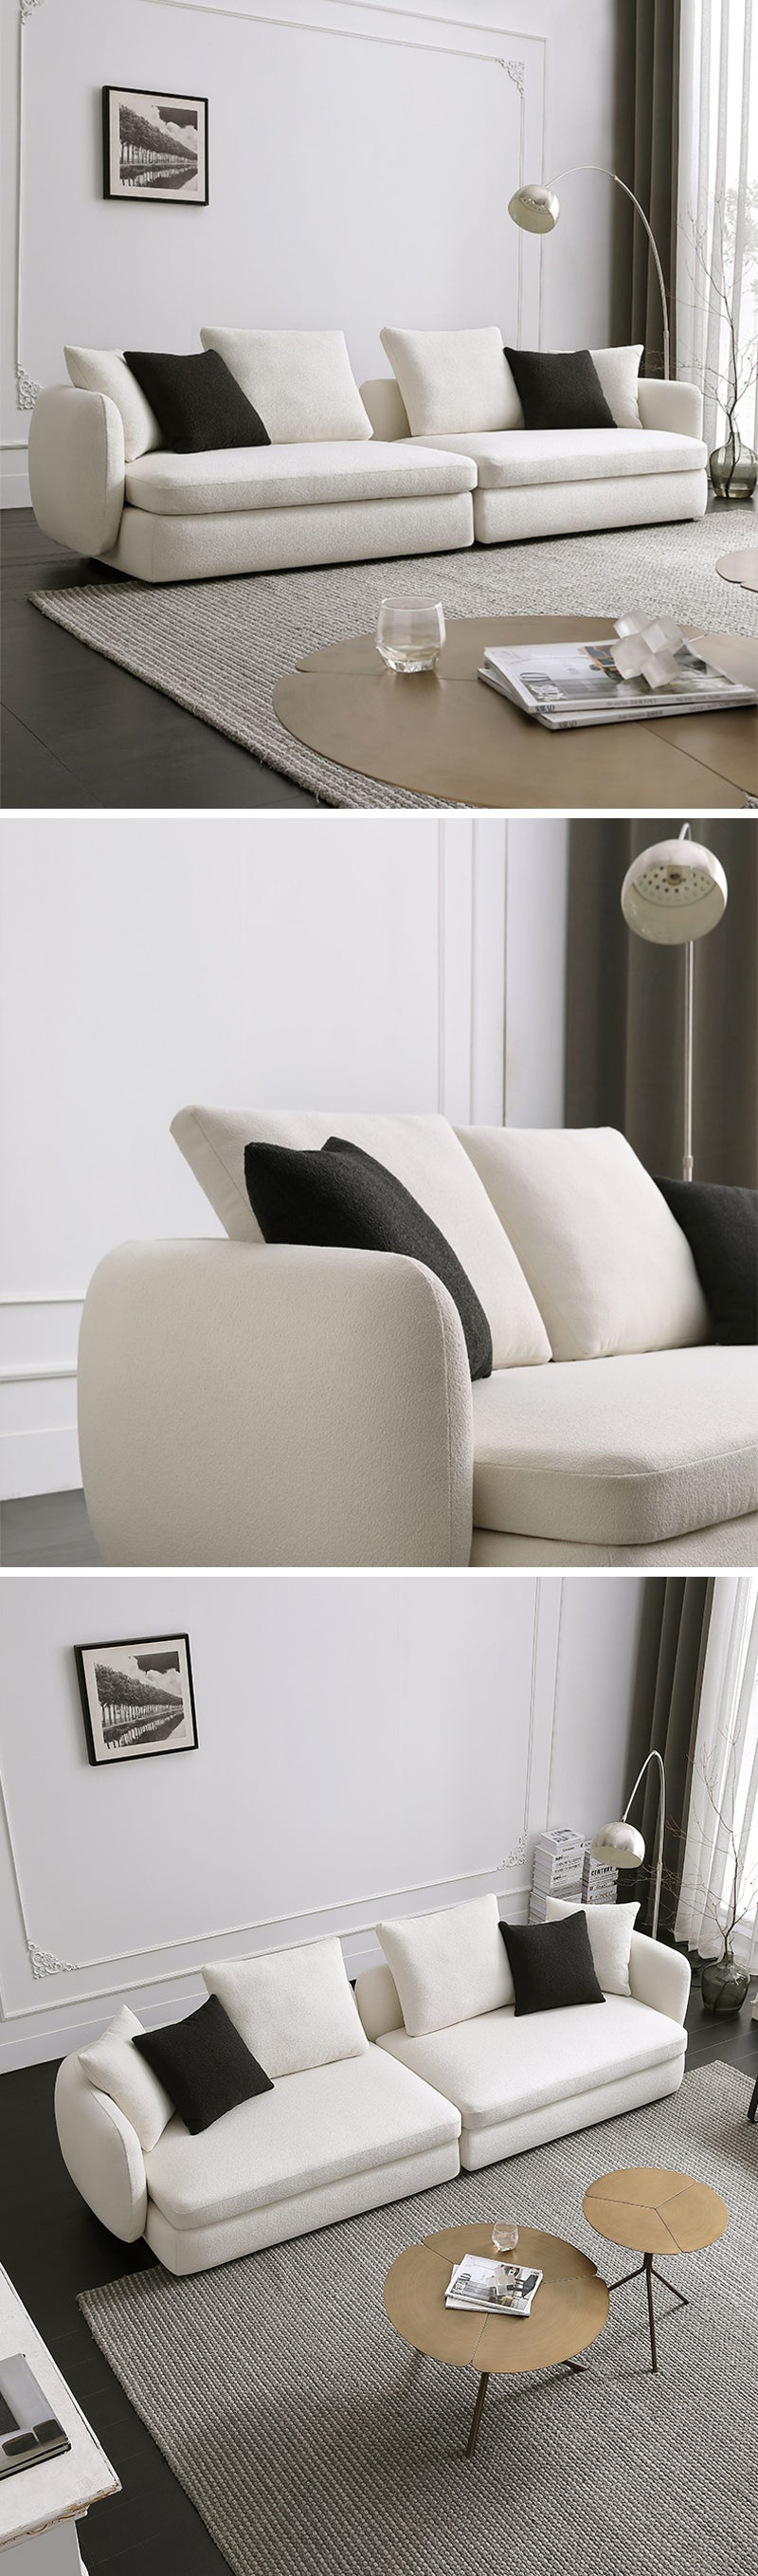 INDOORPLUS公式/高品質な素材と快適なデザインが魅力のソファー インテリアの主役として輝く